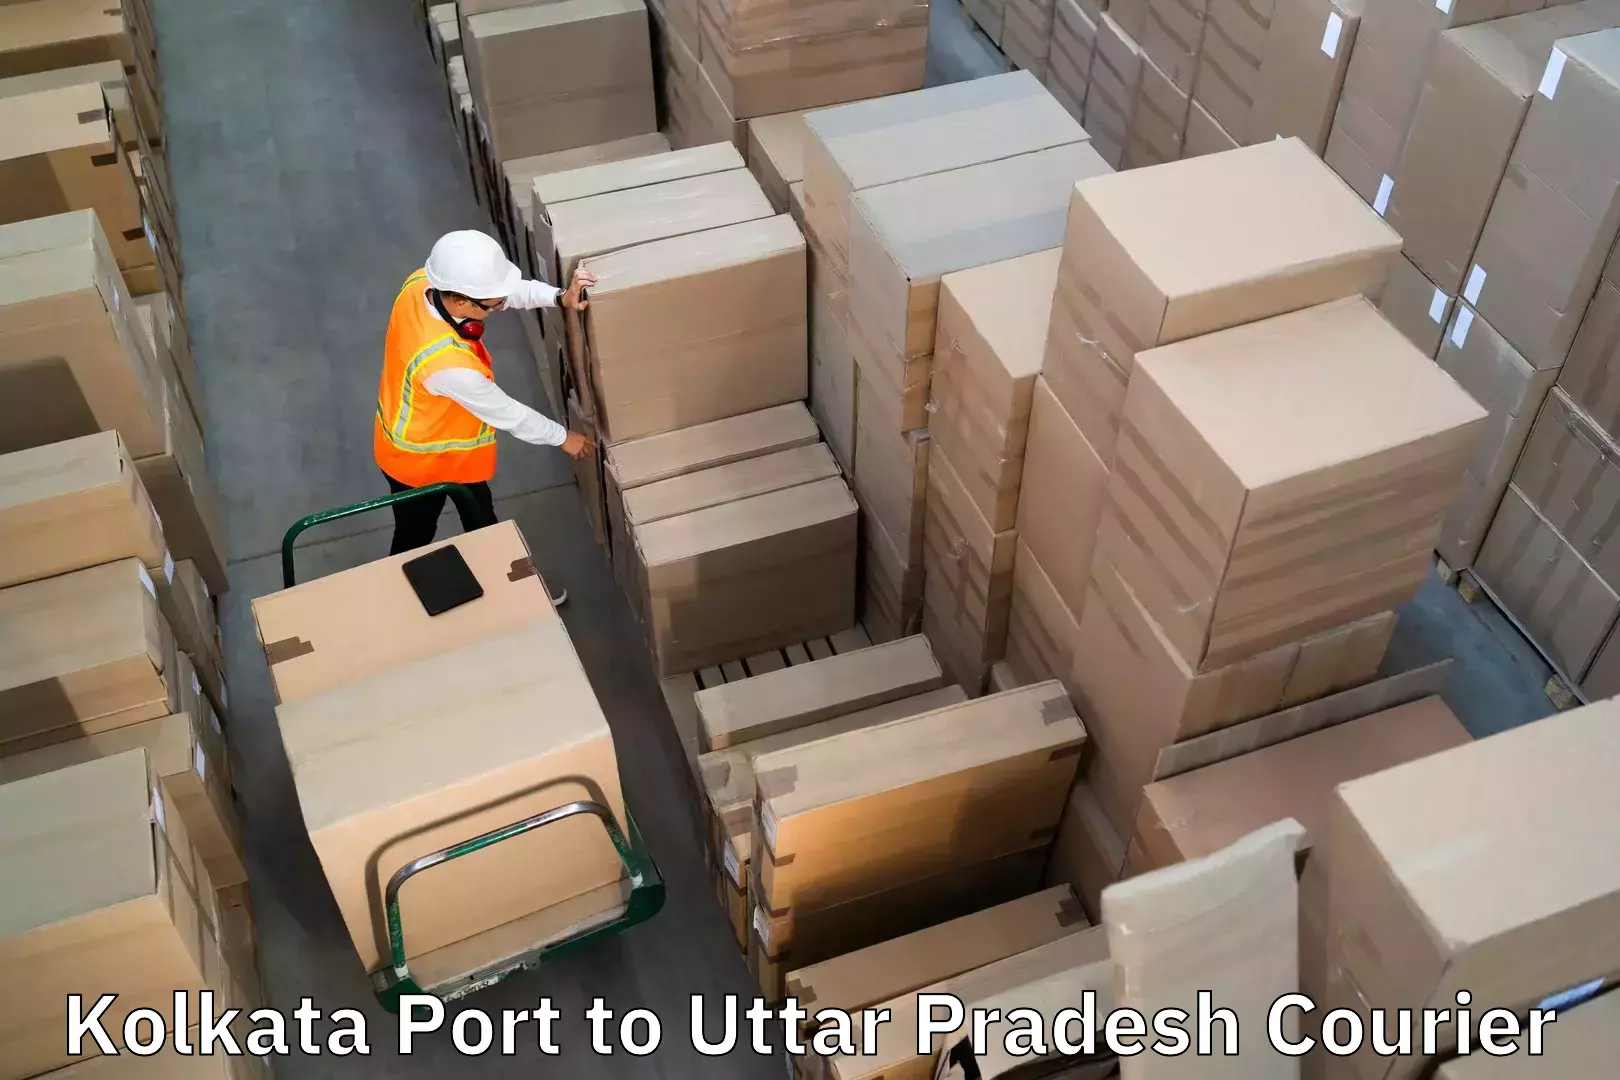 Baggage transport network Kolkata Port to Amethi